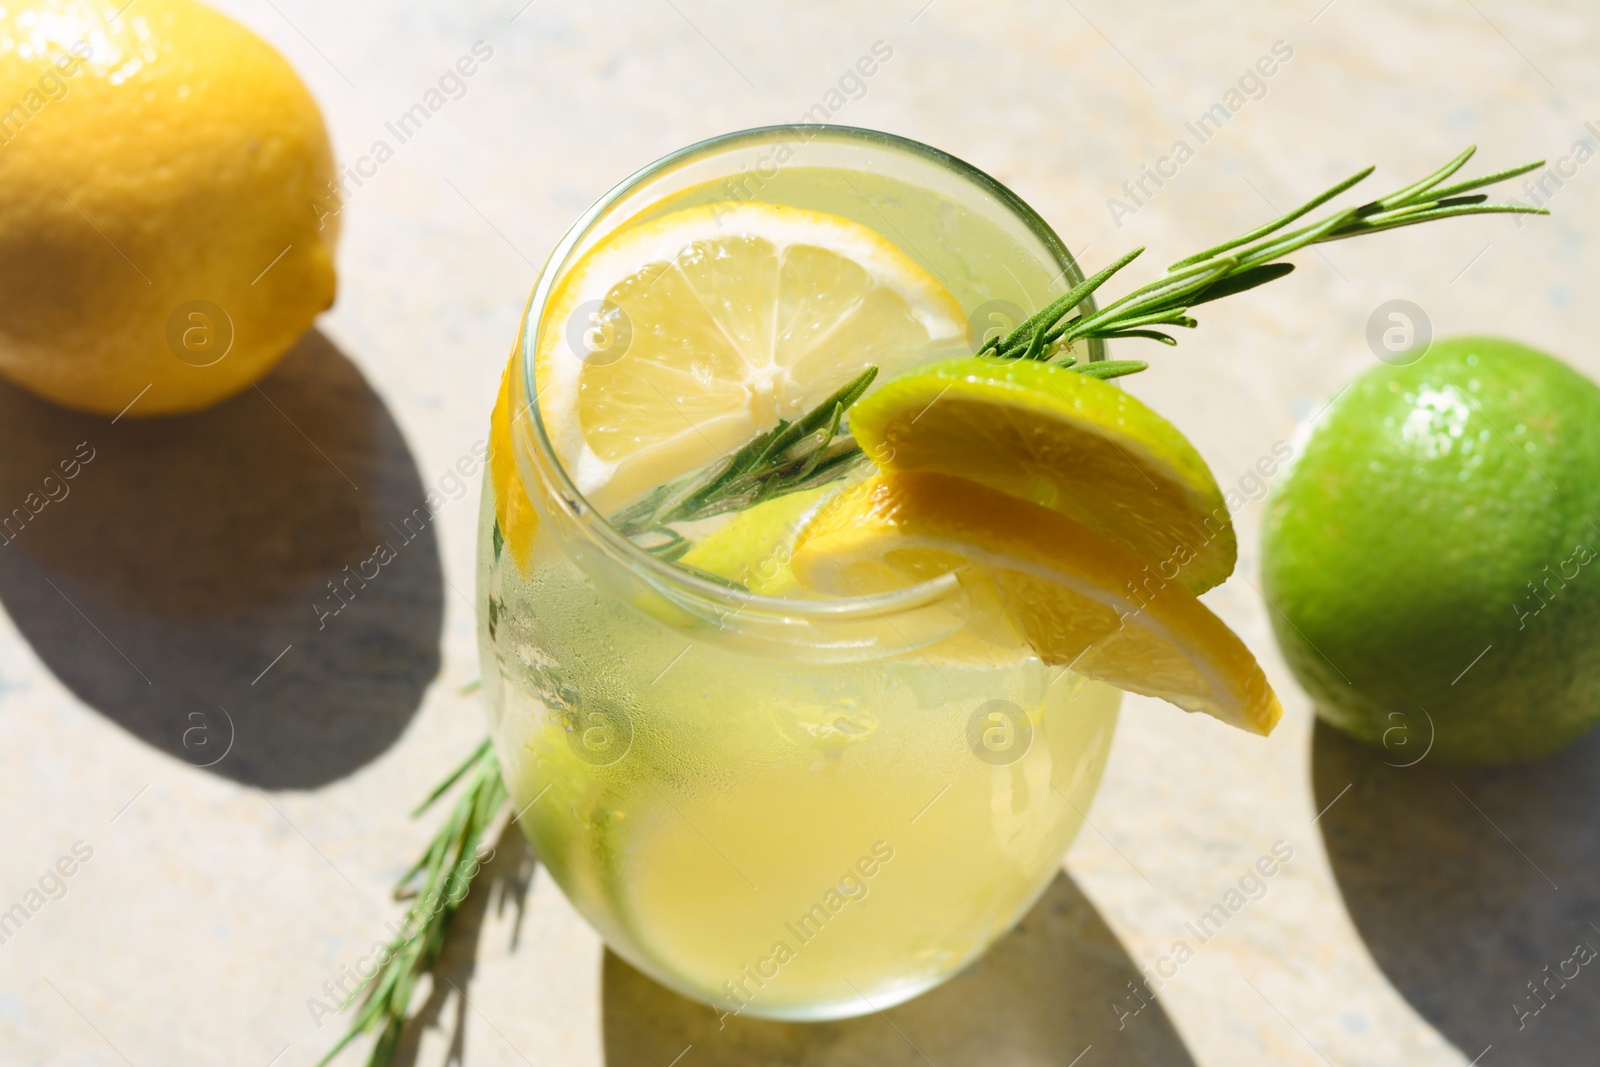 Photo of Tasty refreshing lemonade and ingredients on light table. Summer drink